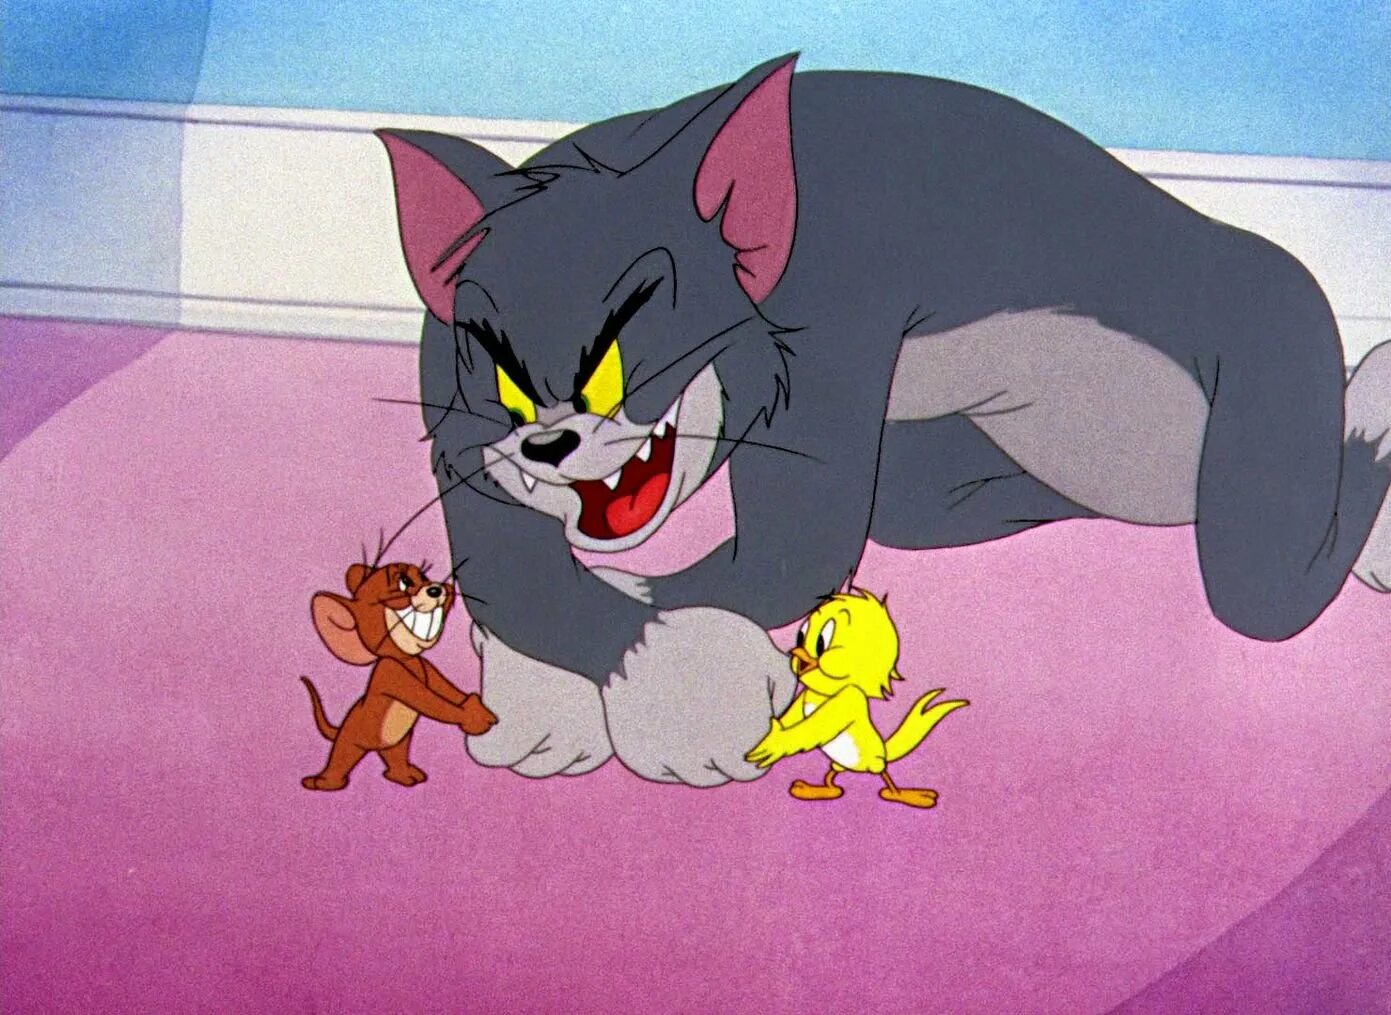 Том из тома и джерри. Tom and Jerry. Том и Джерри том. Tom and Jerry 1960.